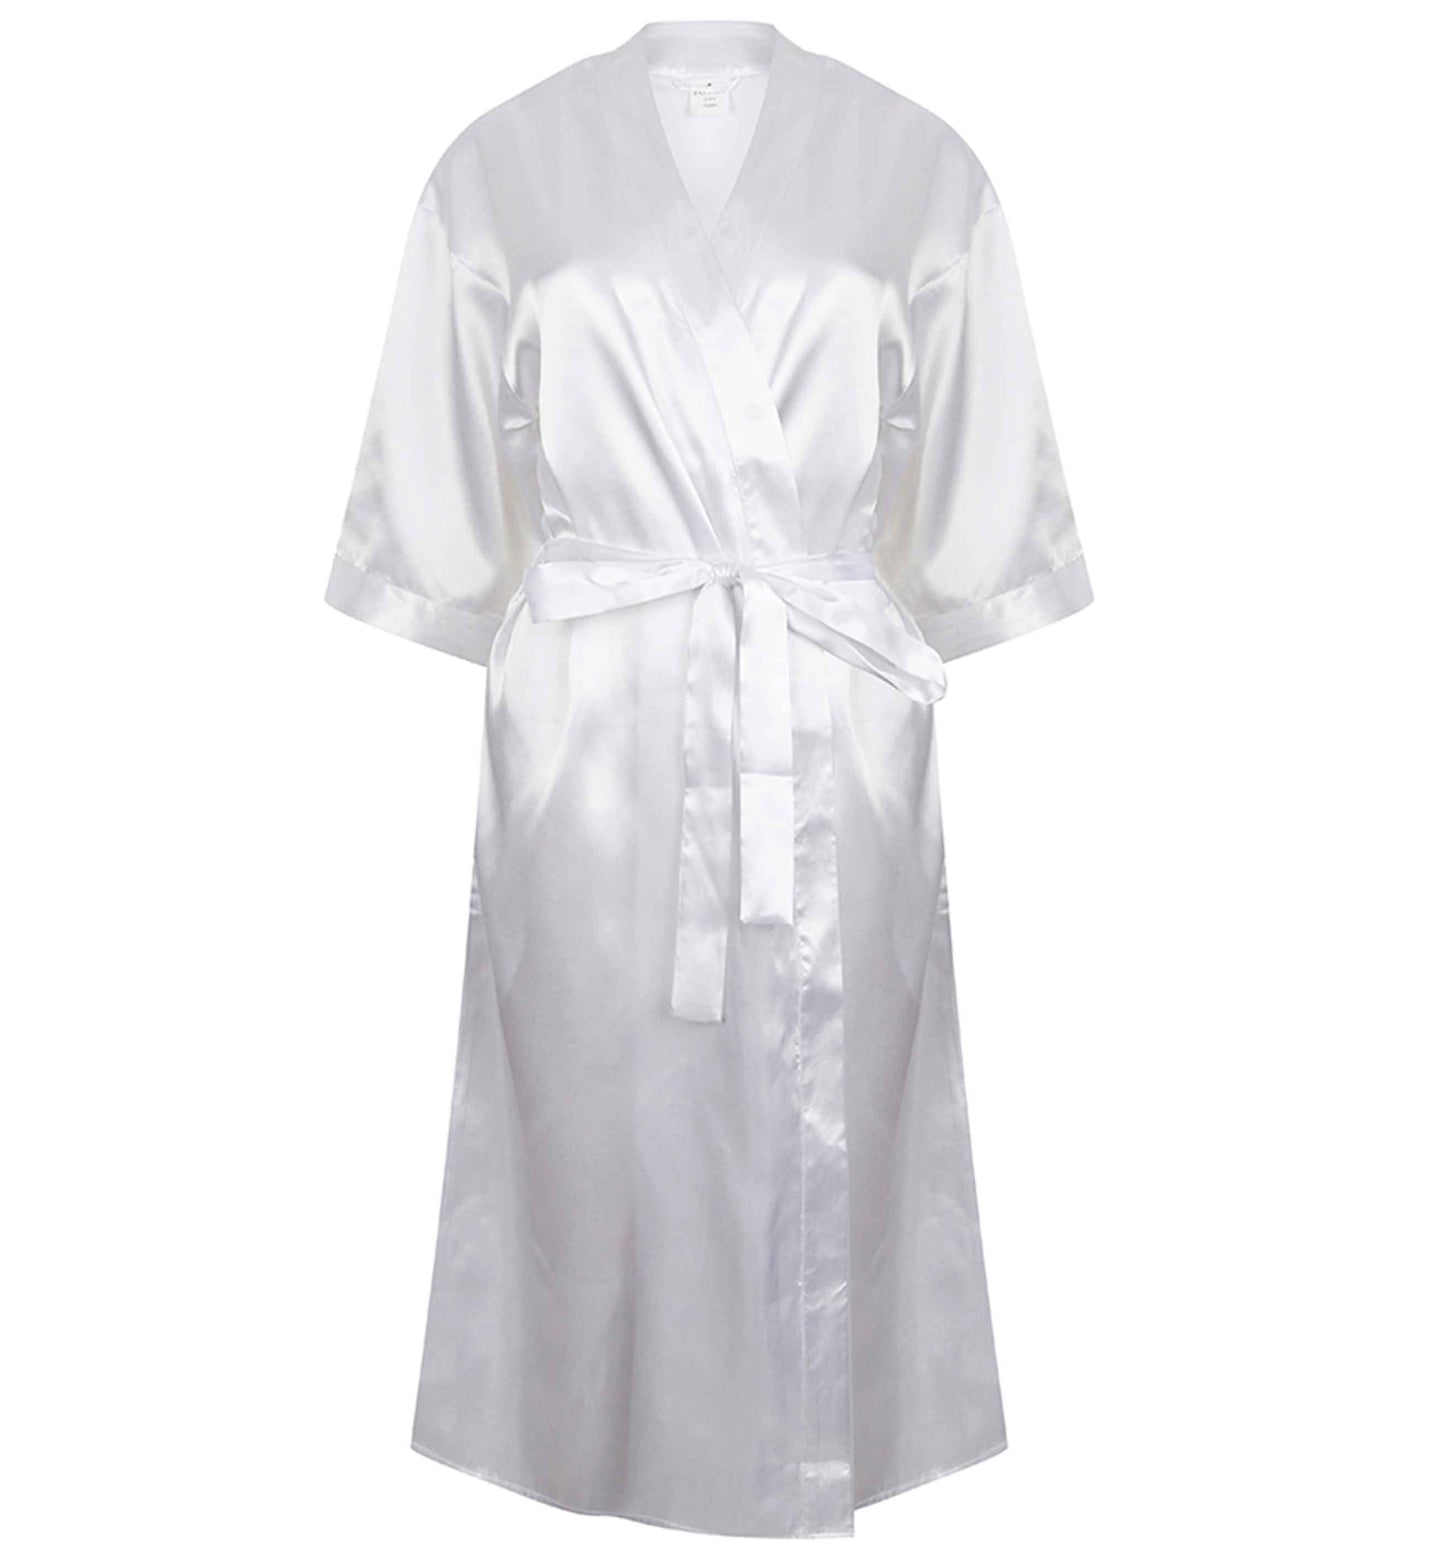 Beware hens on the loose | 8-18 | Kimono style satin robe | Ladies dressing gown